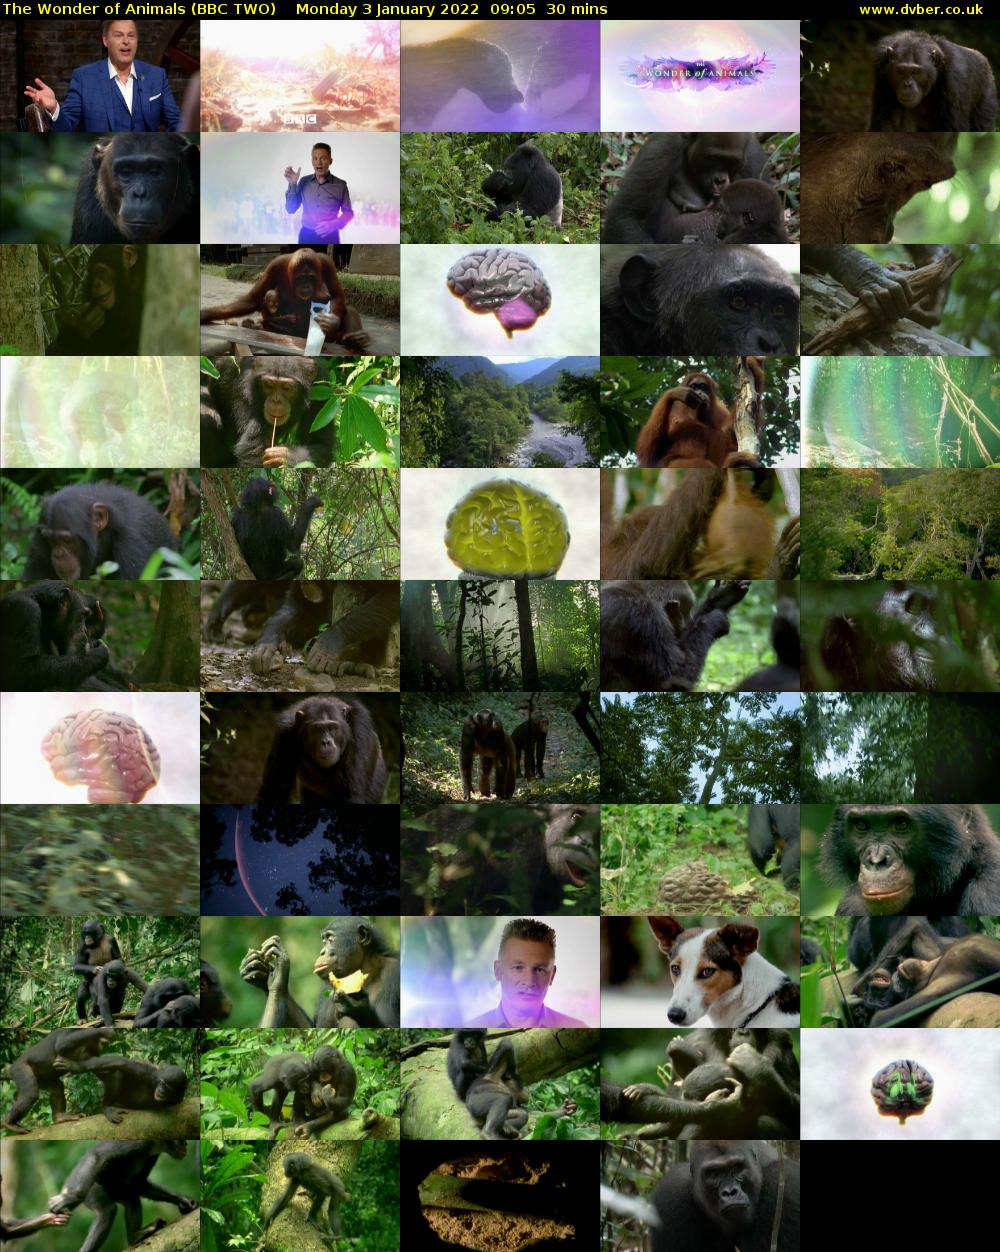 The Wonder of Animals (BBC TWO) Monday 3 January 2022 09:05 - 09:35